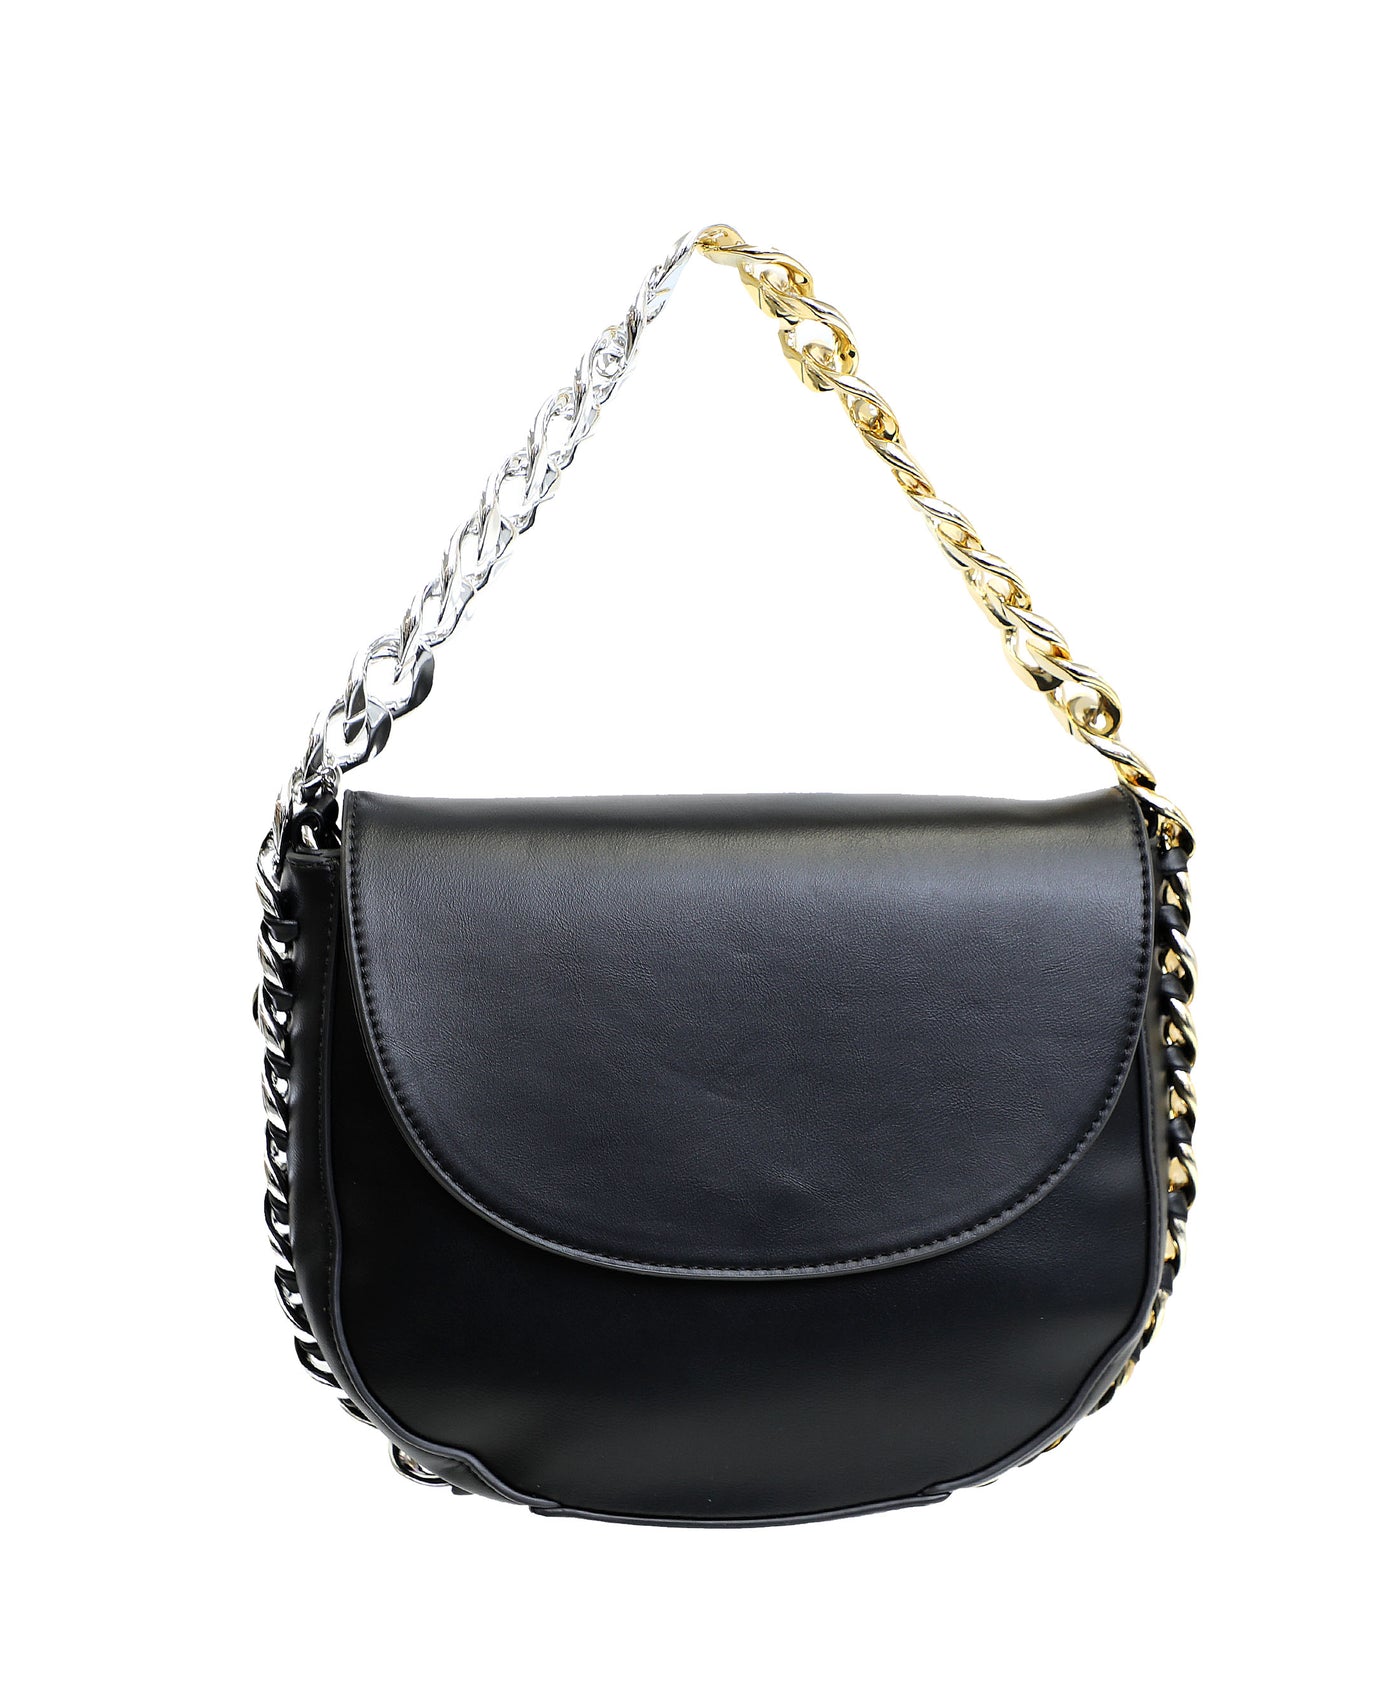 Half-Moon Handbag w/ Two-Tone Chain Strap image 1